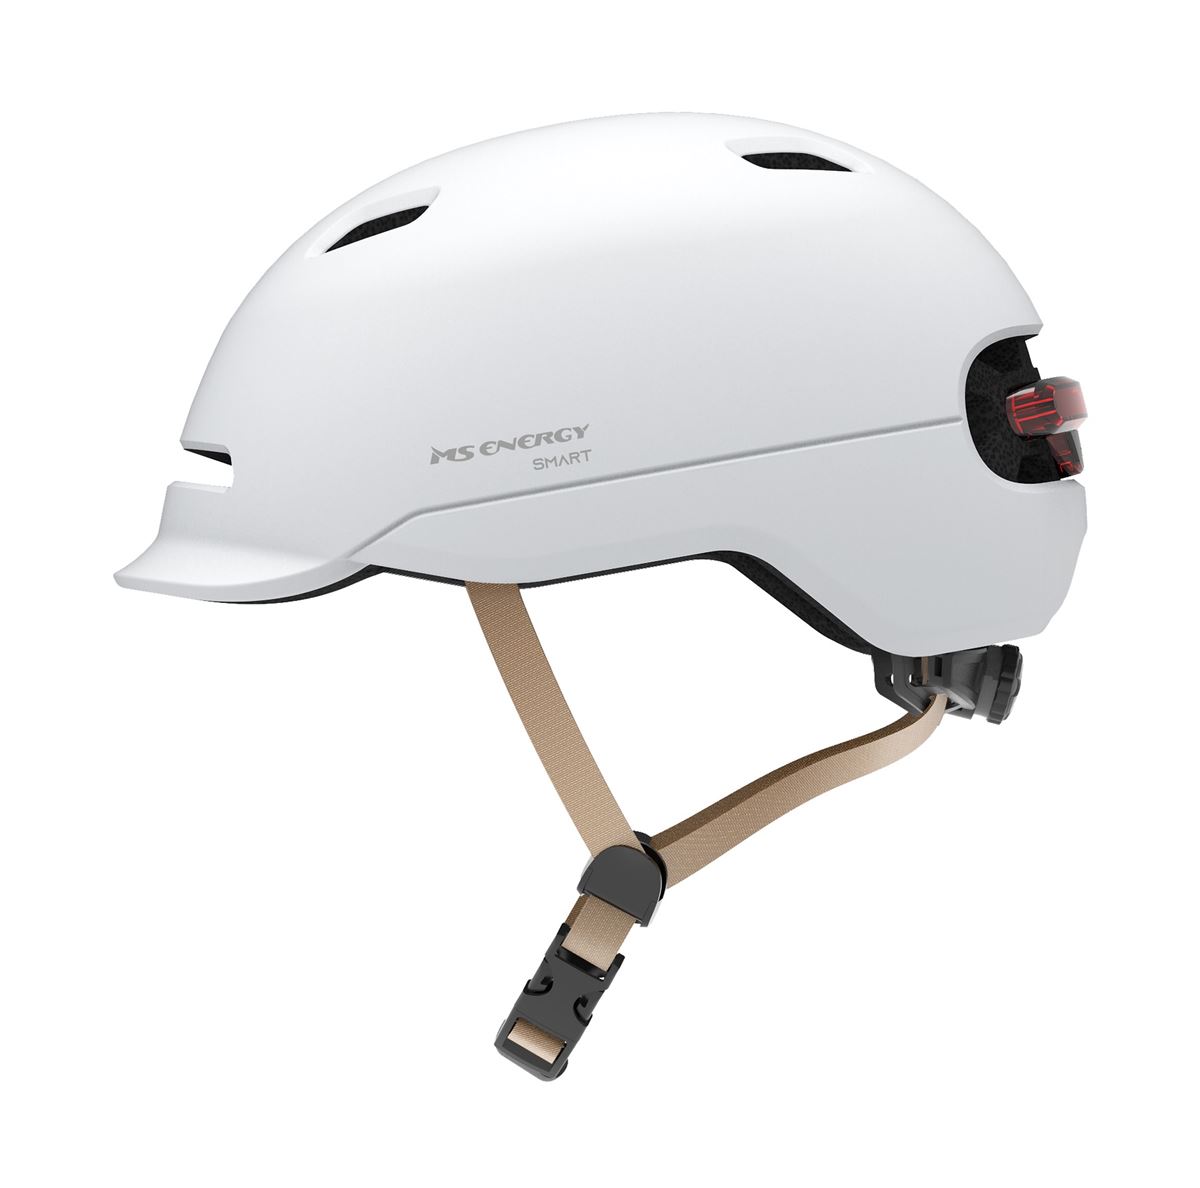 MS Energy helmet MSH-20S smart